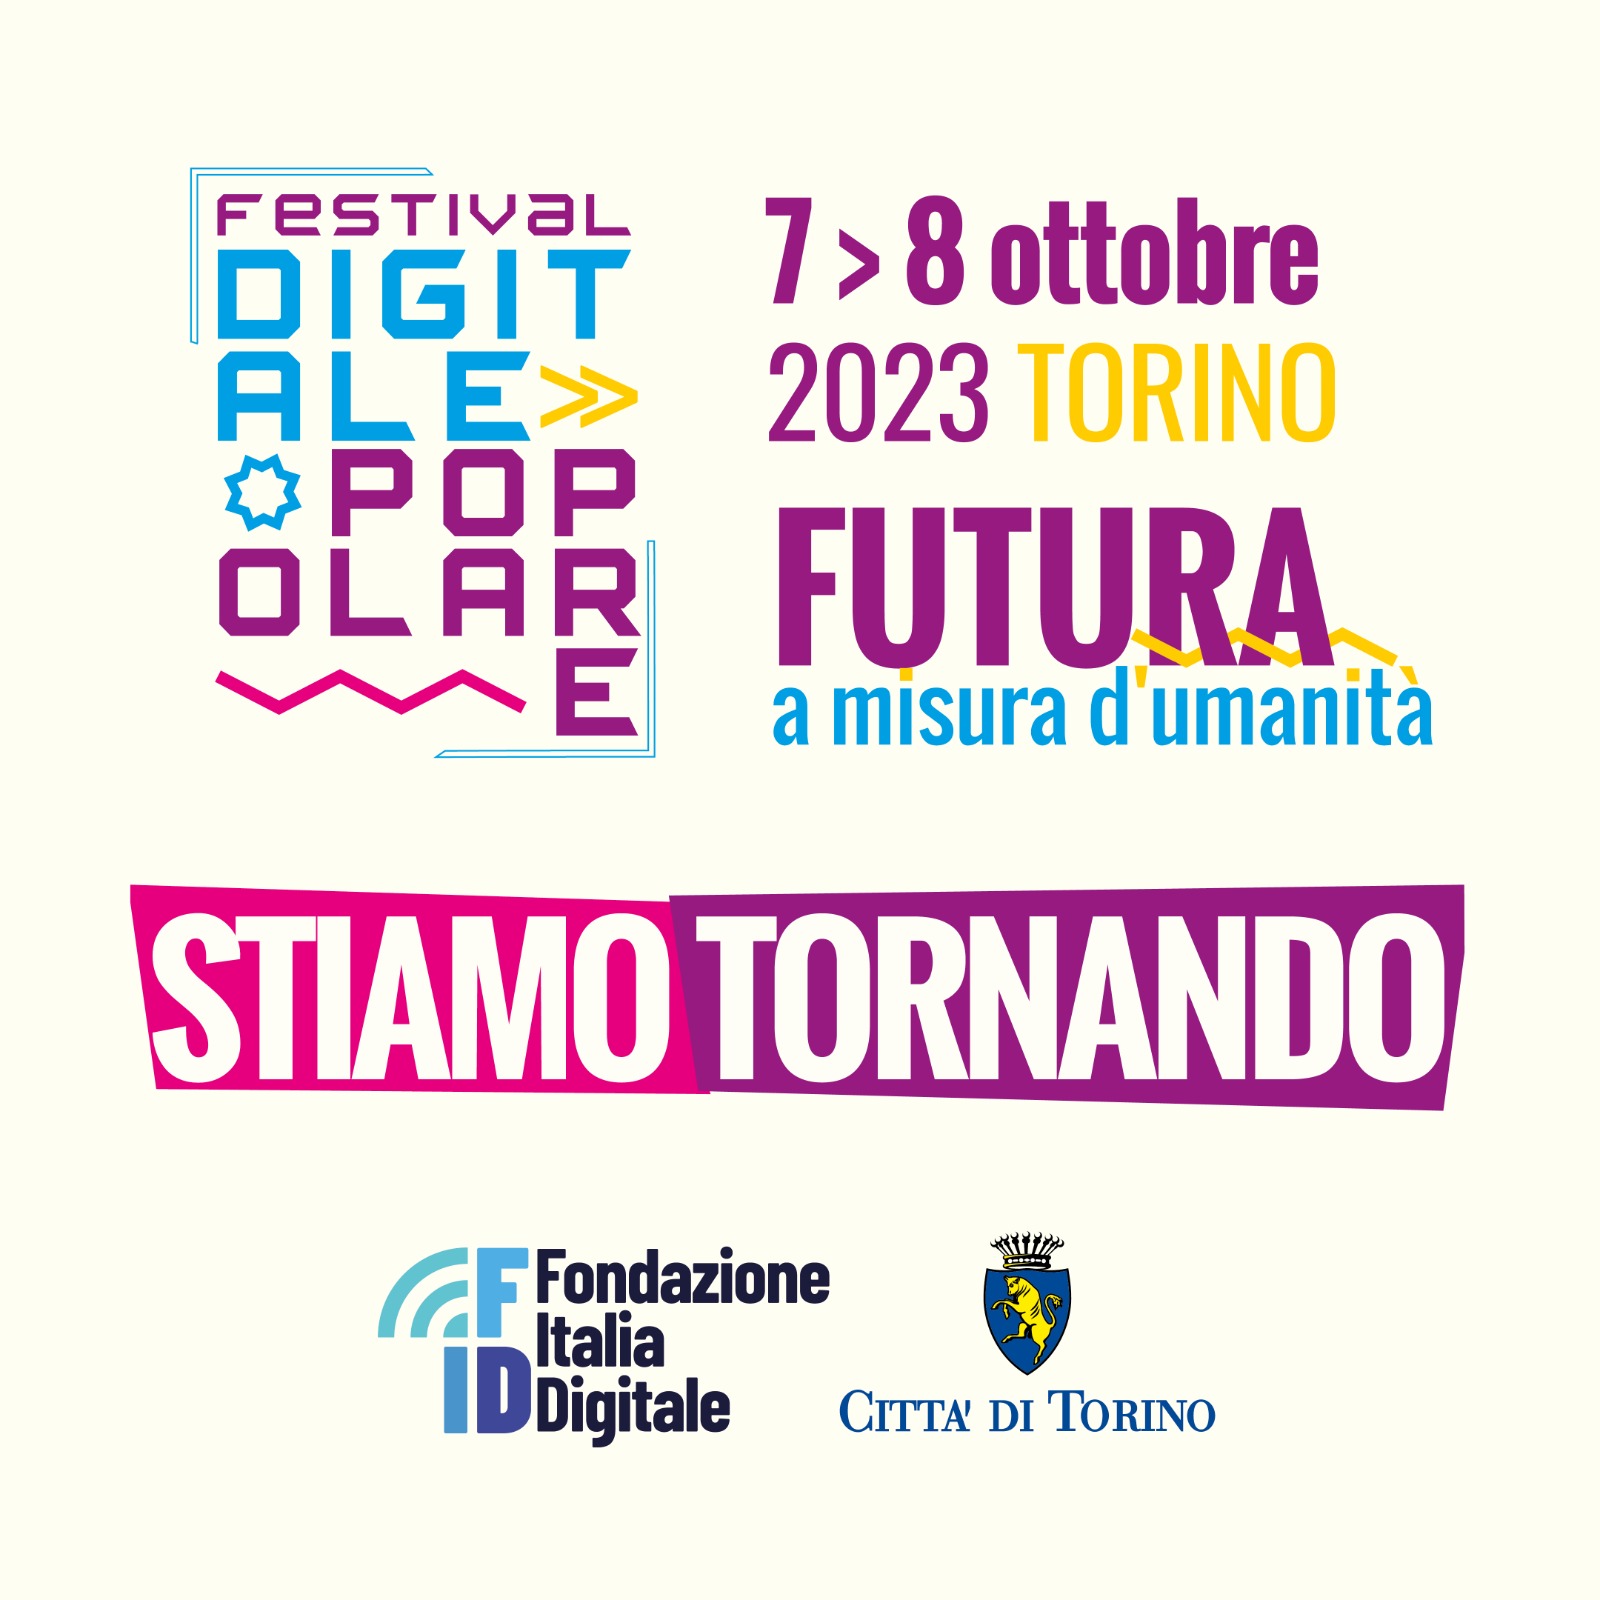 Festival Digitale Popolare